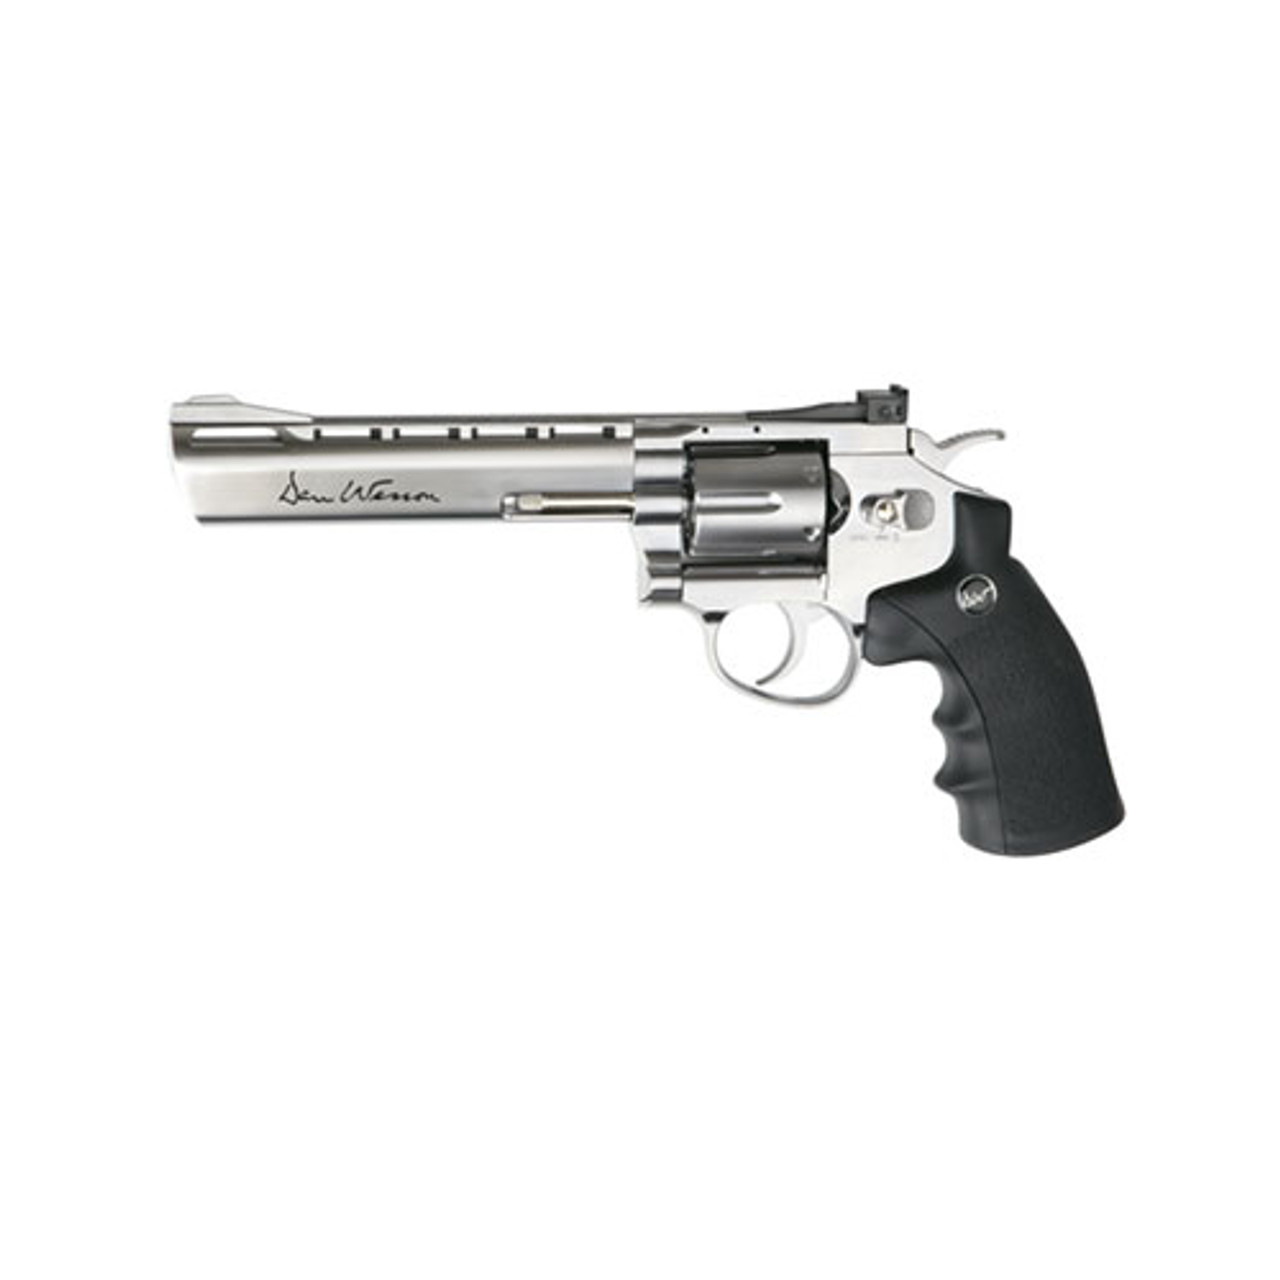 Dan Wesson Airsoft Gun Revolver 4 Silver Badlands Paintball Gear Canada